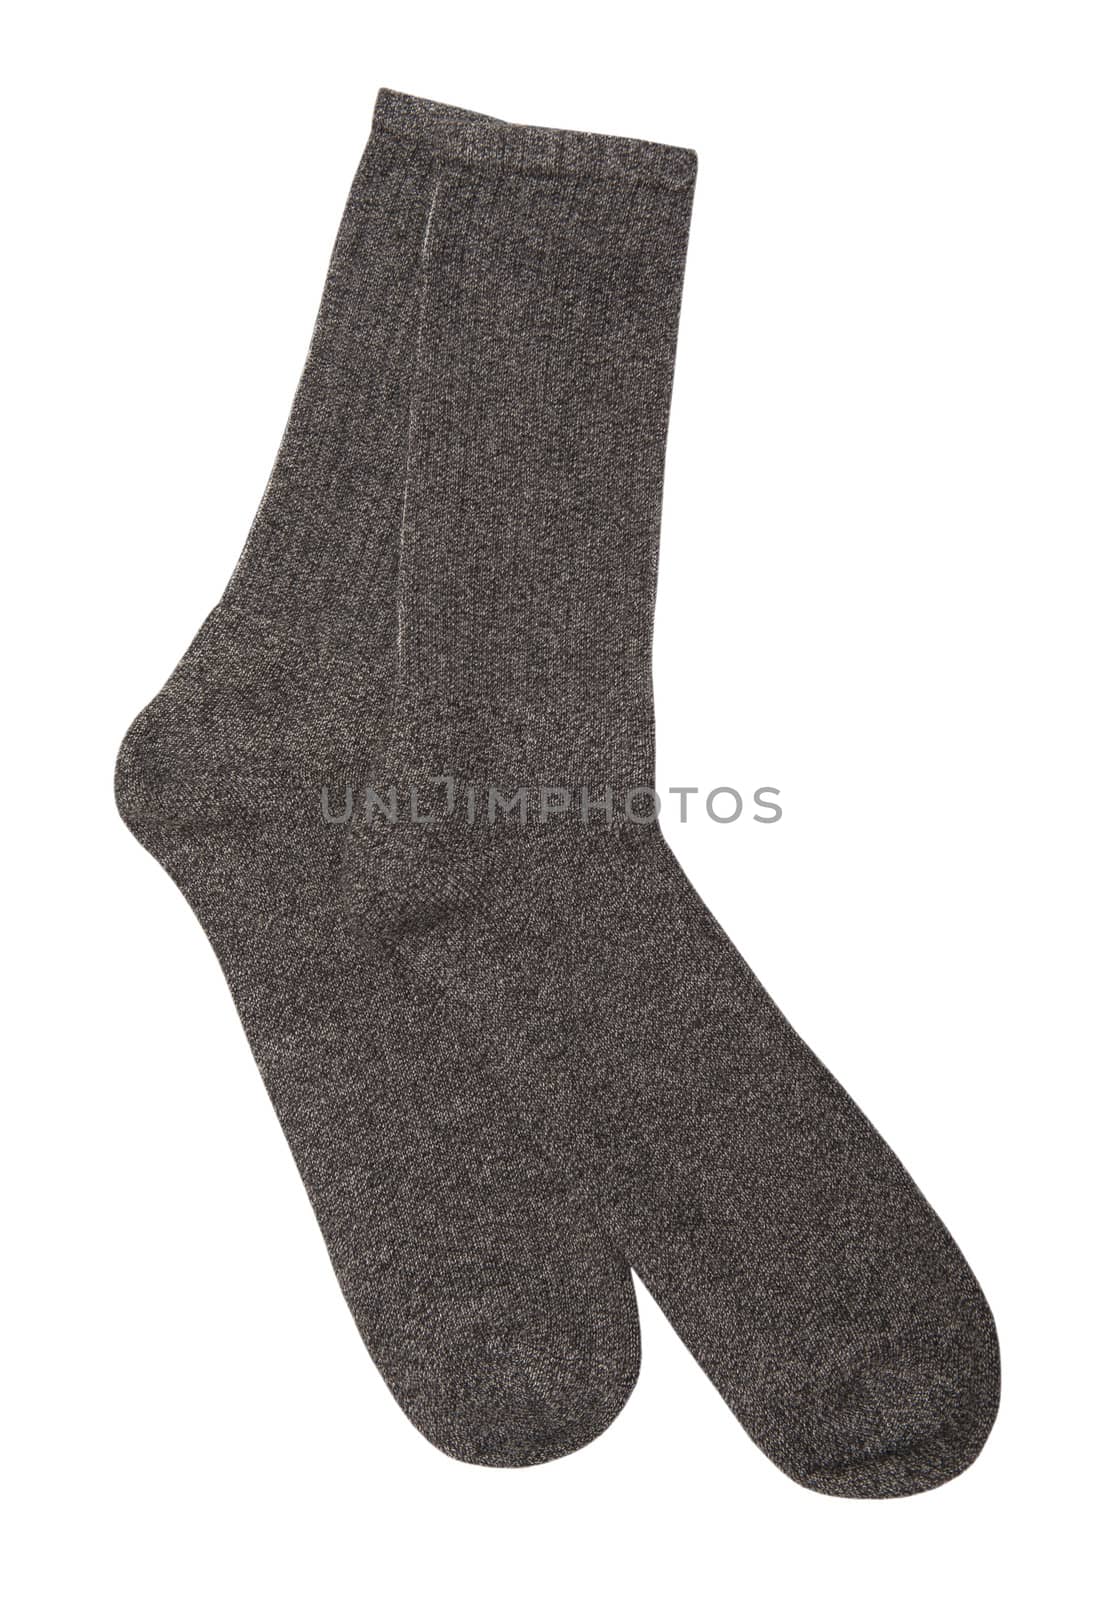 Socks by Yaurinko